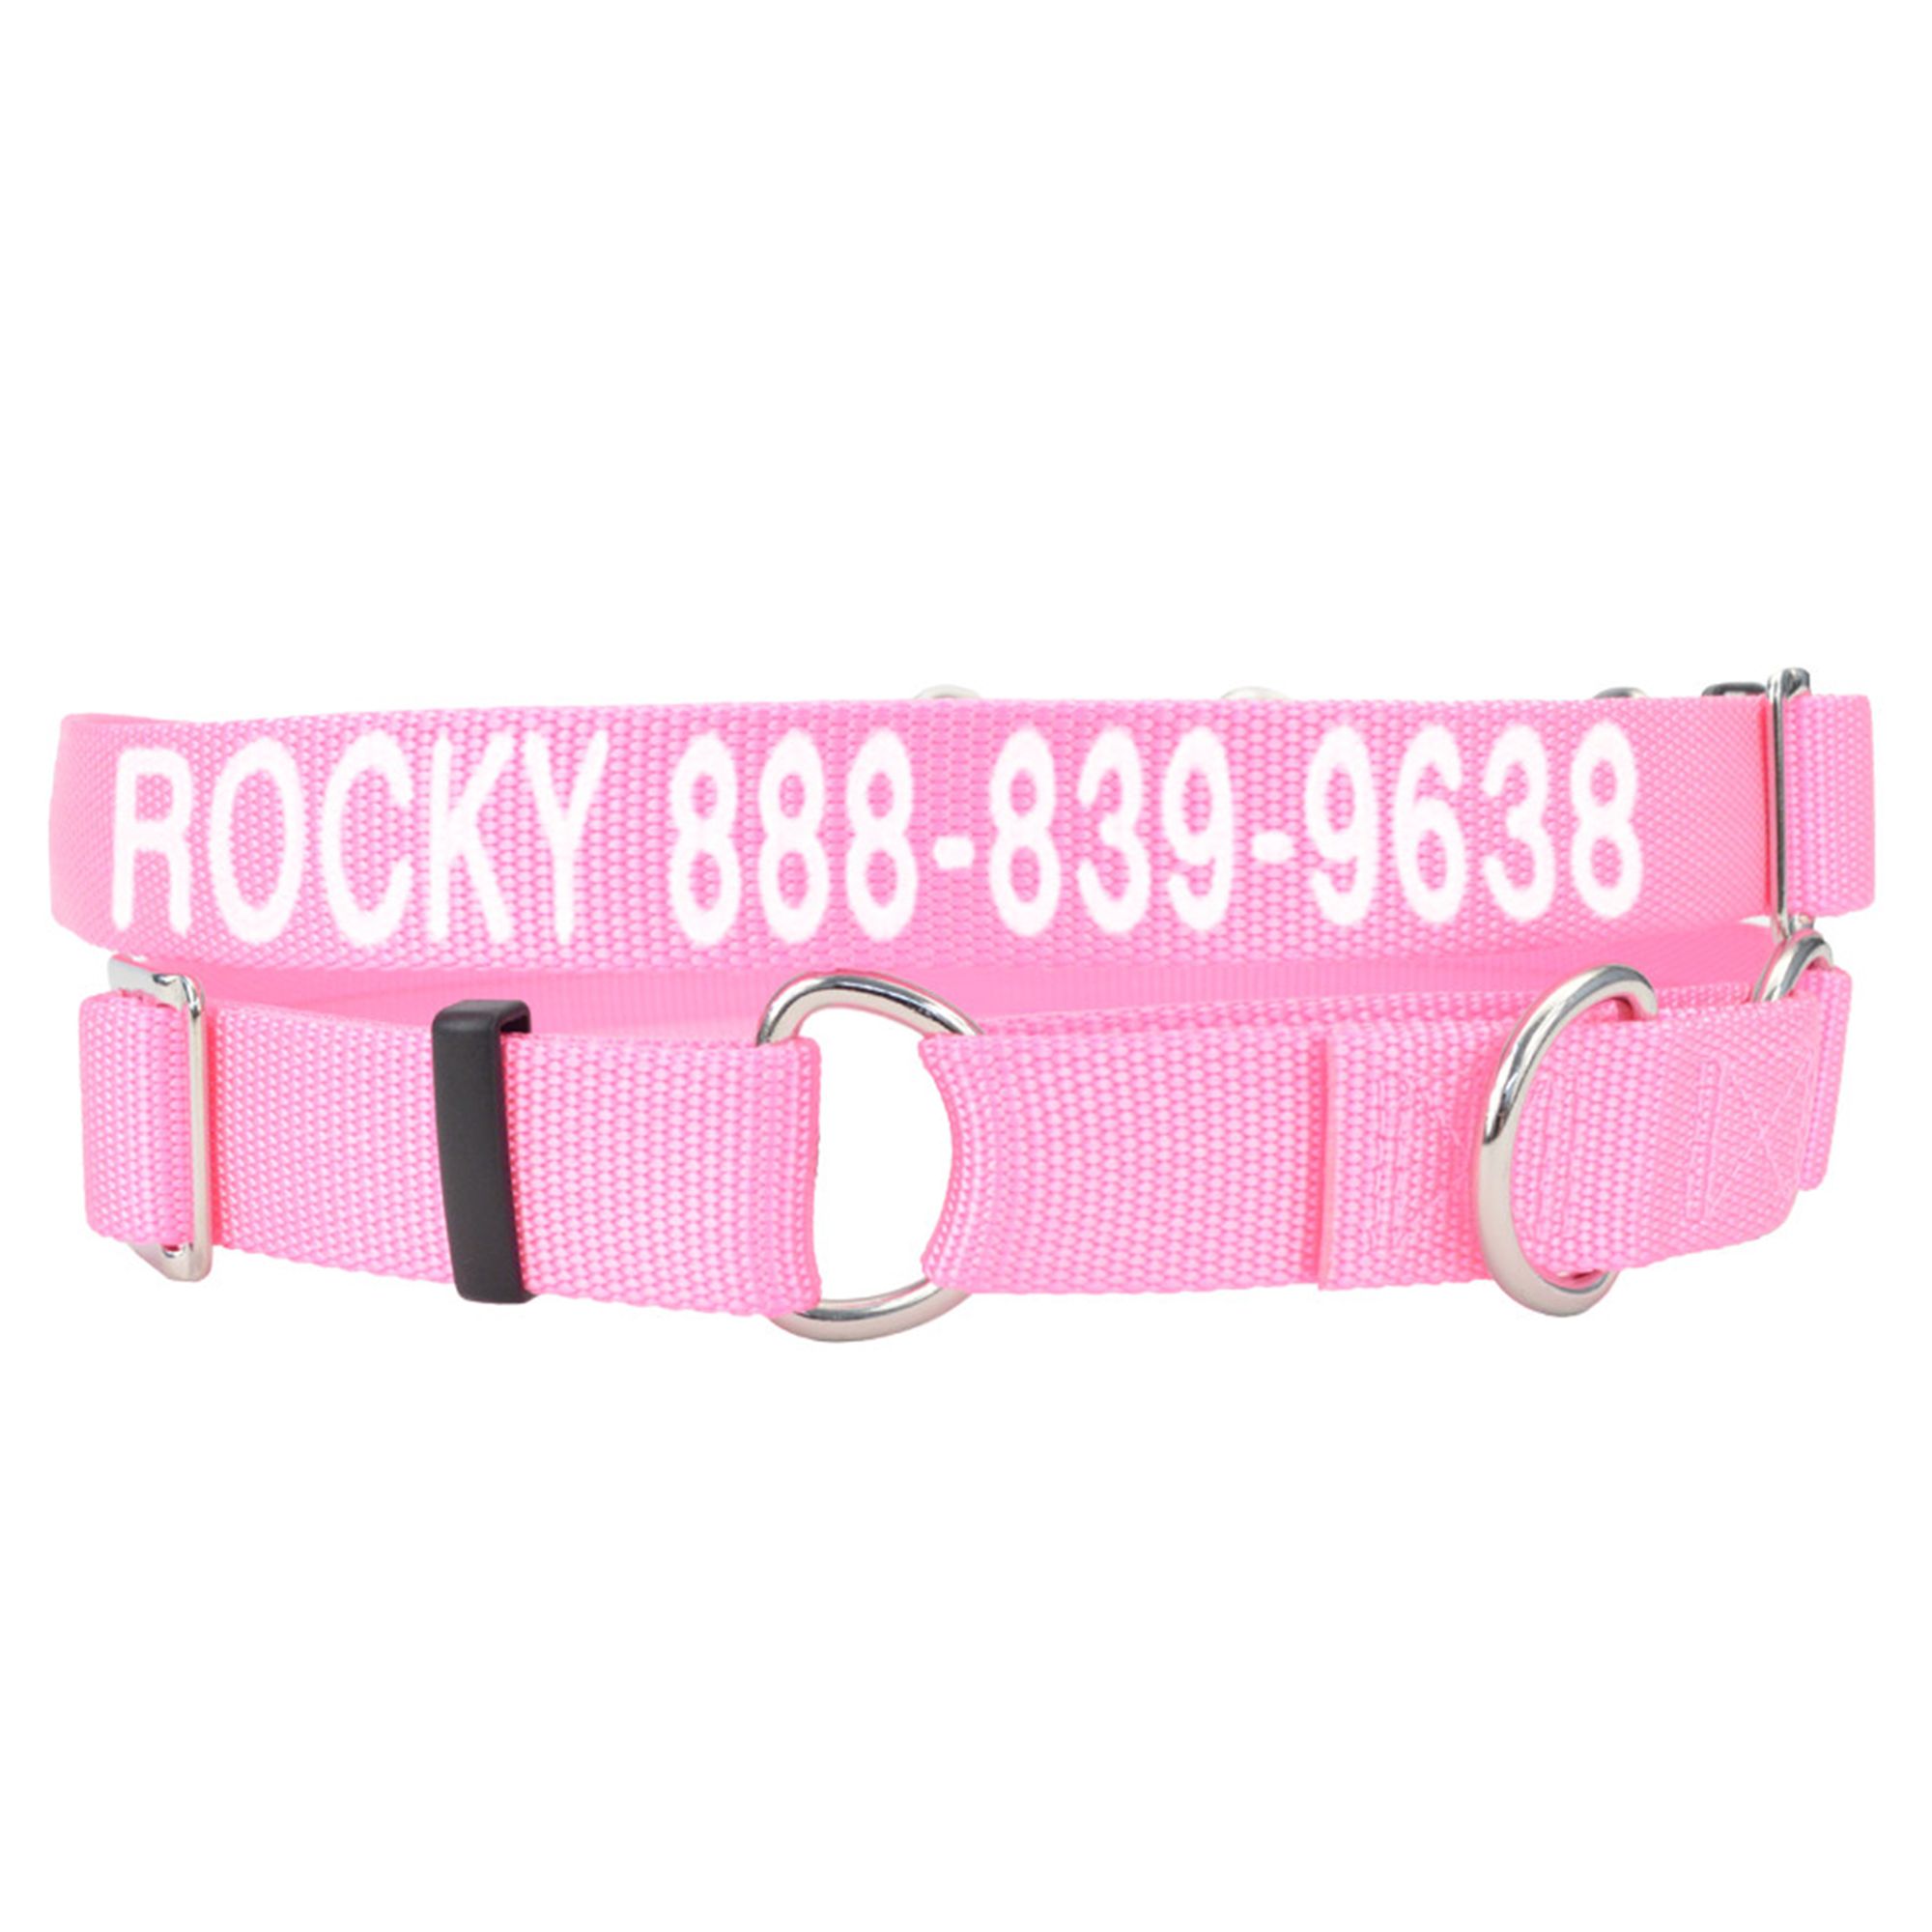 Coastal Pet Products Personalized Martingale Dog Collar in Pink, Size: 14L x 0.75W | Nylon PetSmart